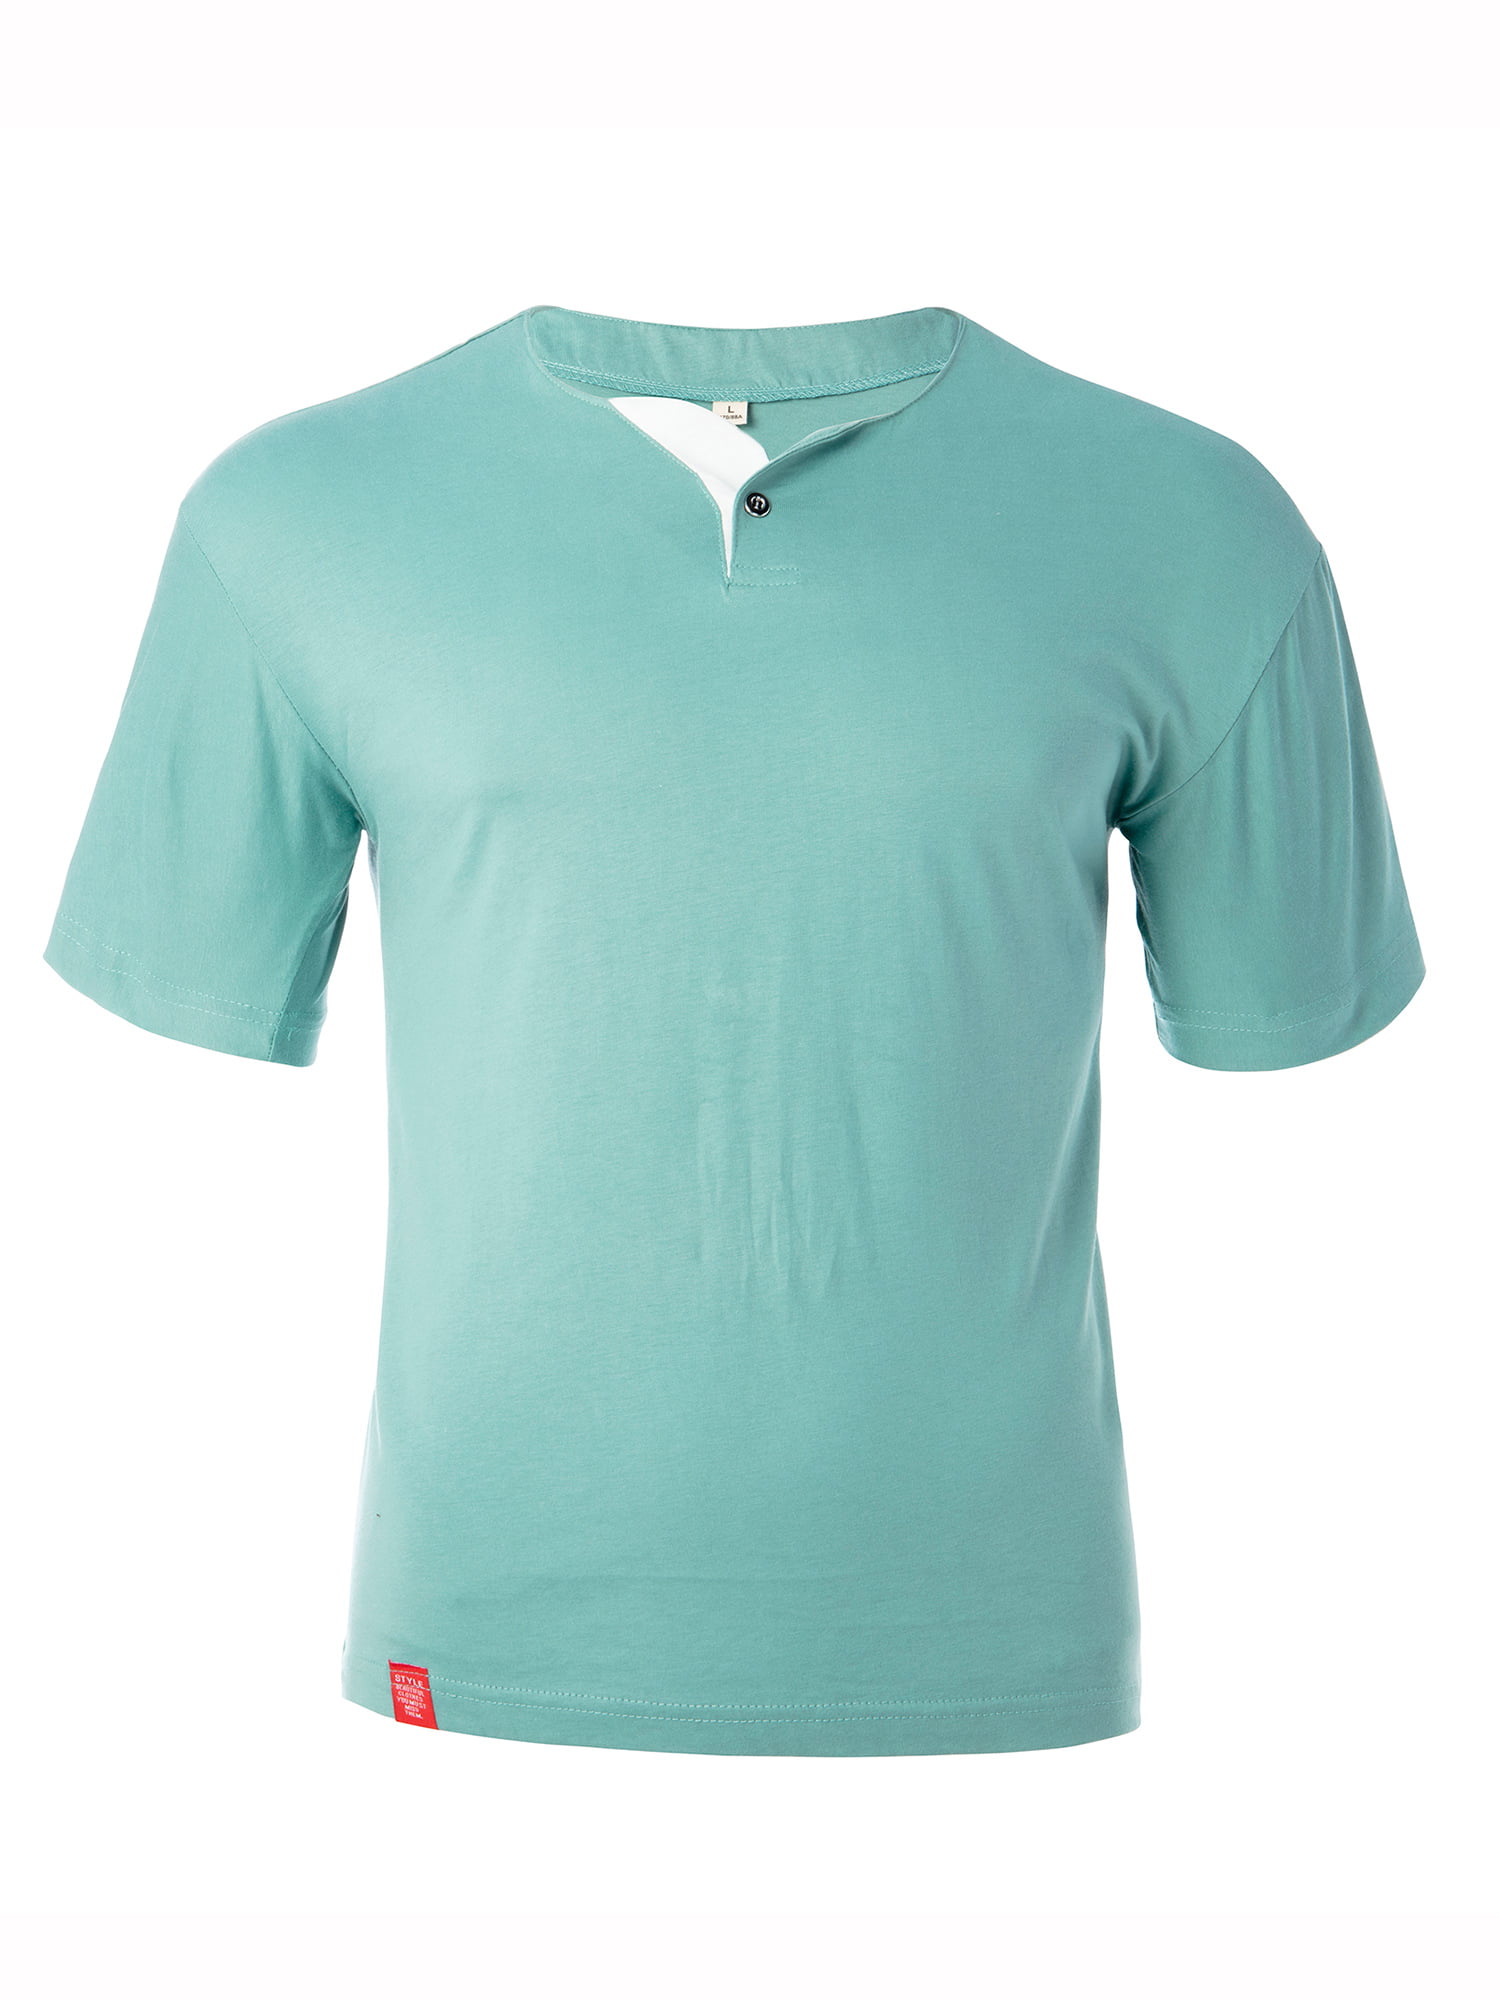 Youloveit Men's T Shirts Stretch Short Sleeve Workout Tee Casual Cotton Tee Shirts Slim Fit Shirt - Walmart.com